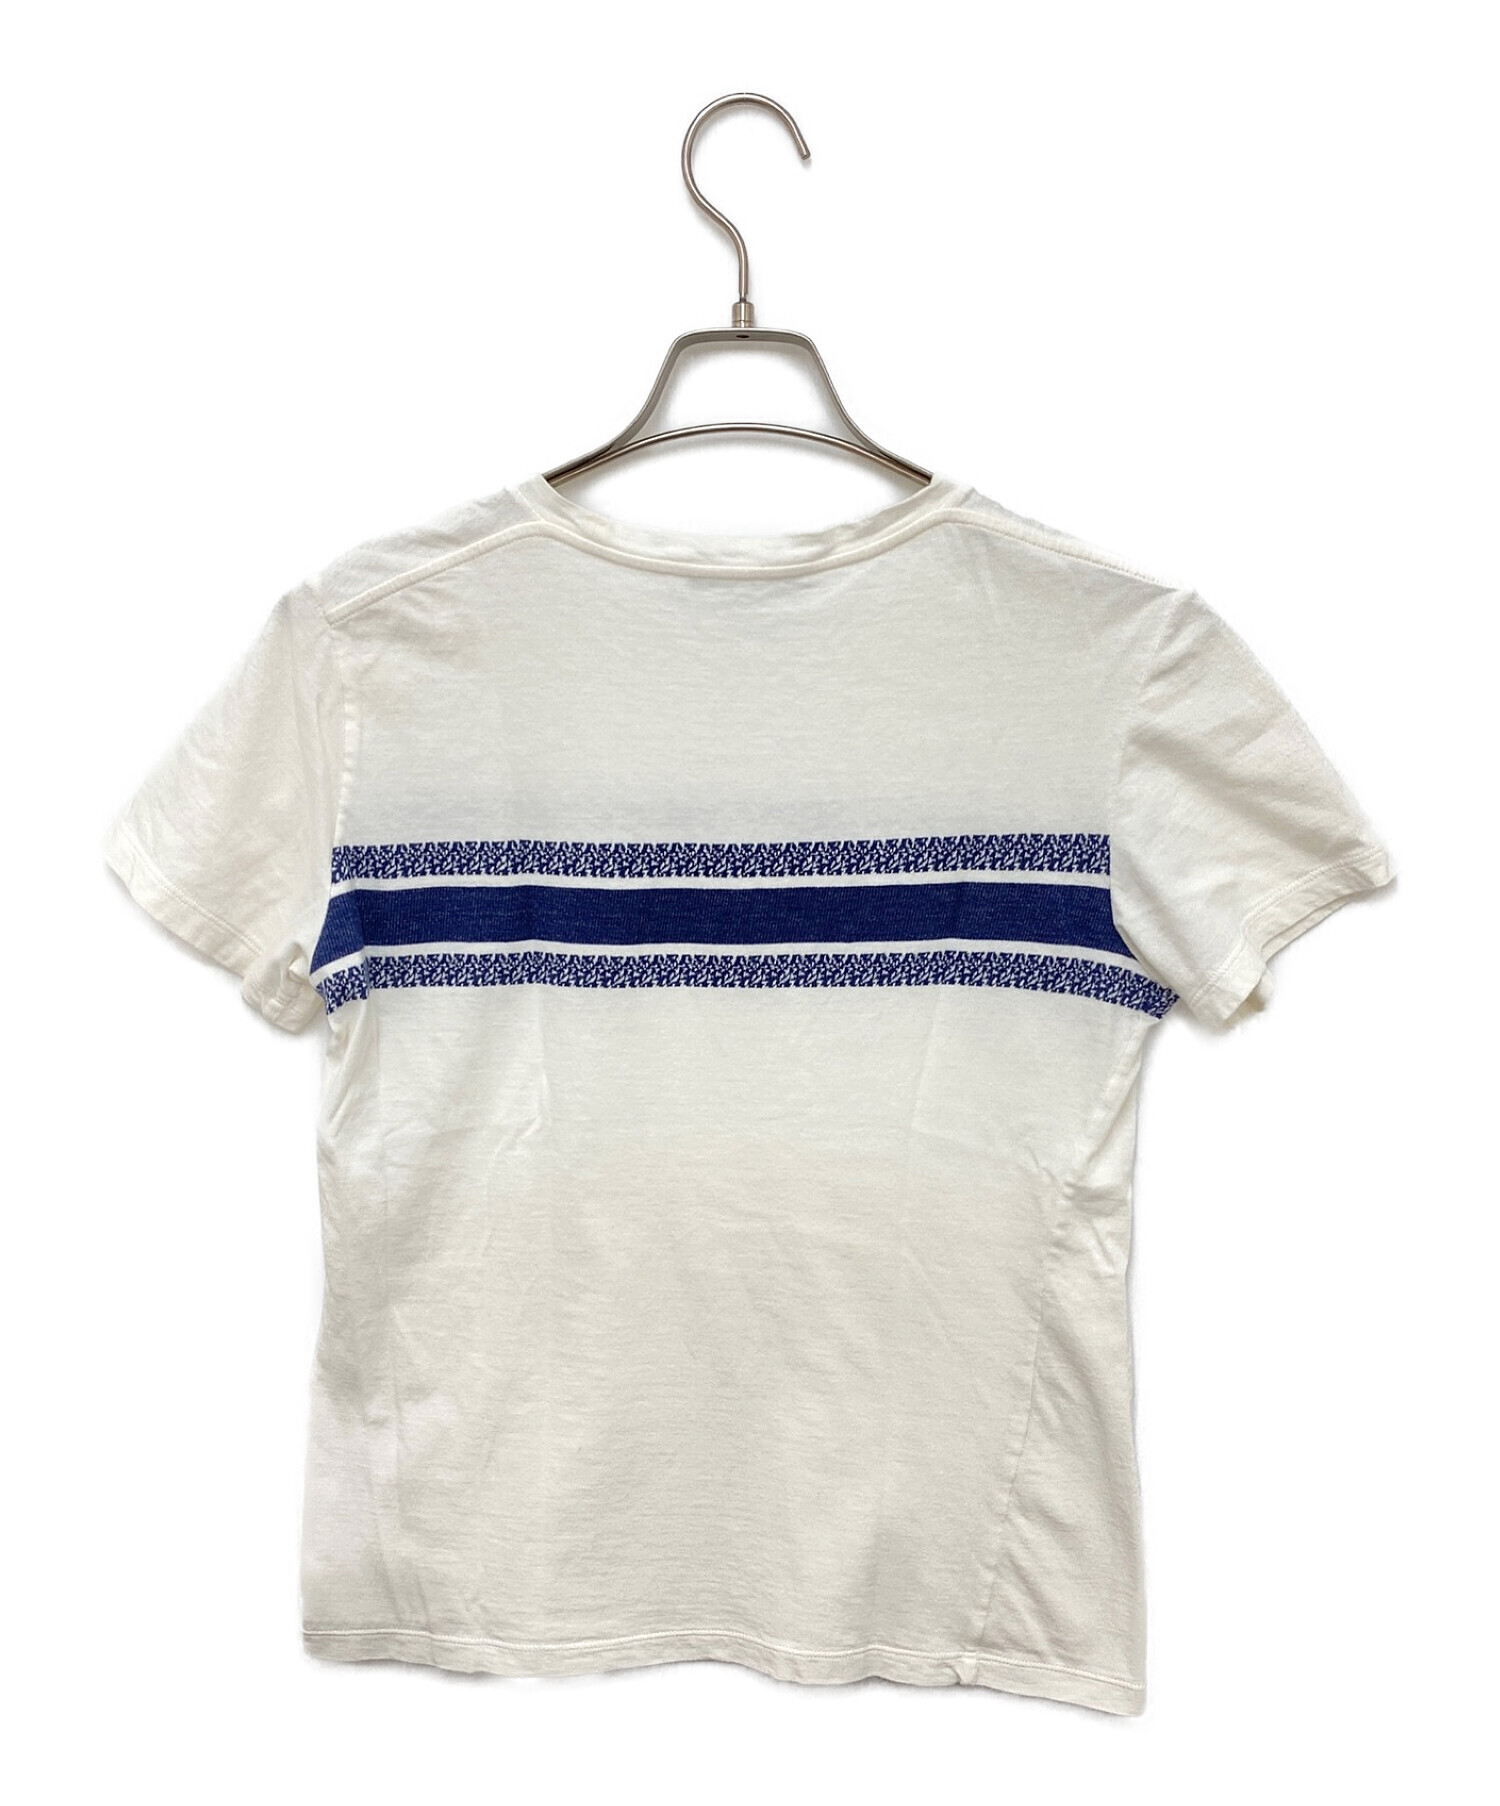 Christian Dior (クリスチャン ディオール) シグネチャーロゴ Tシャツ ホワイト×ブルー サイズ:M